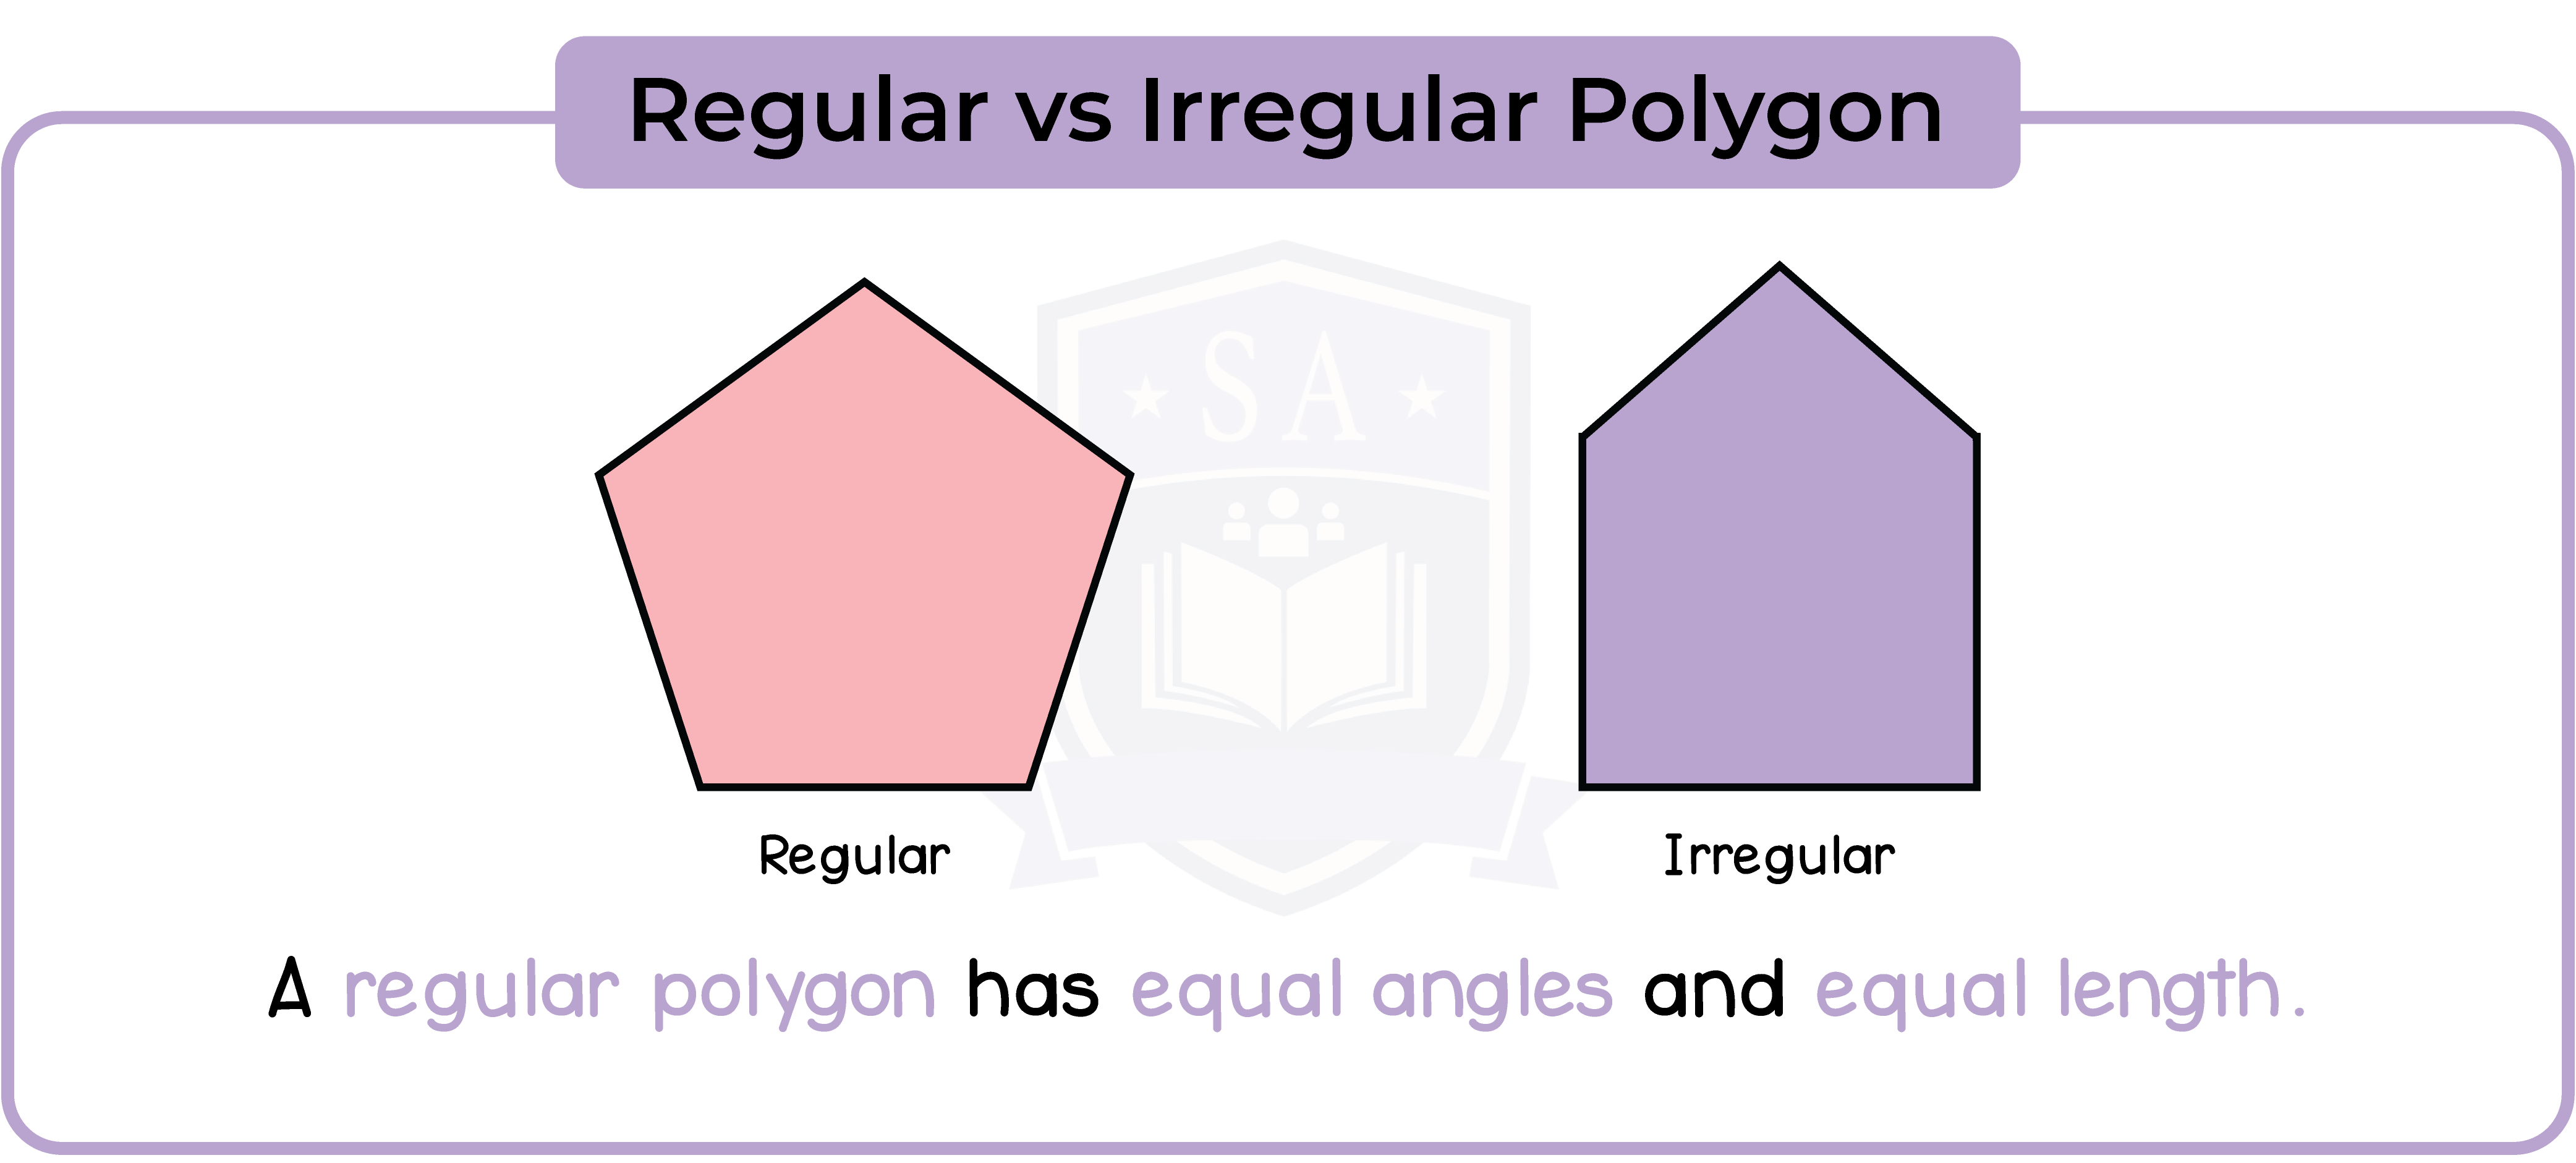 edexcel_igcse_mathematics a_topic 26_polygons_005_Regular vs Irregular Polygon